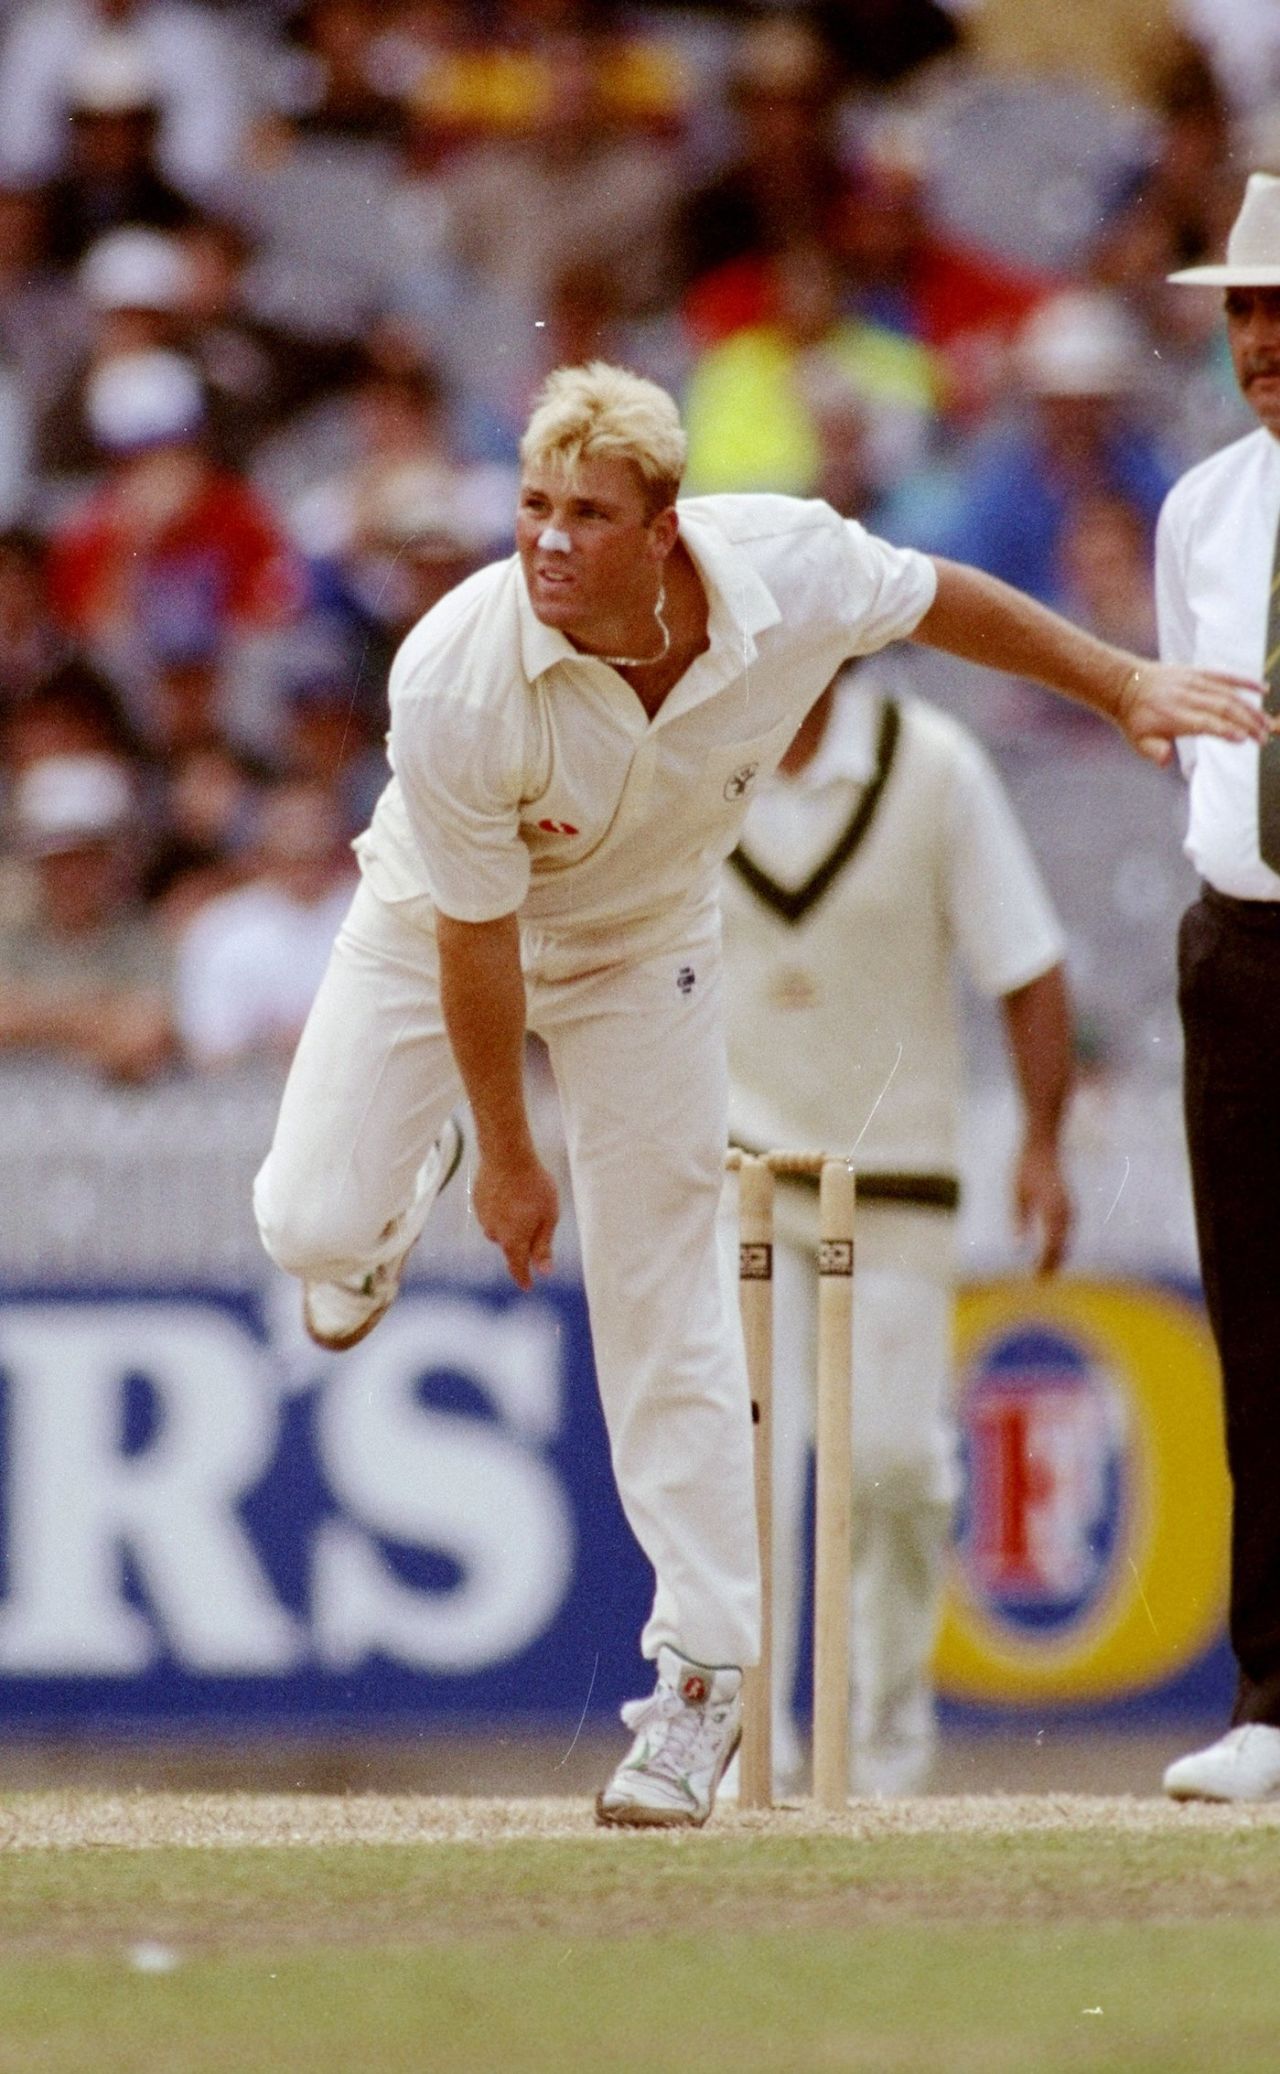 Shane Warne bowls during the MCG Test against West Indies, Melbourne, December 27, 1992